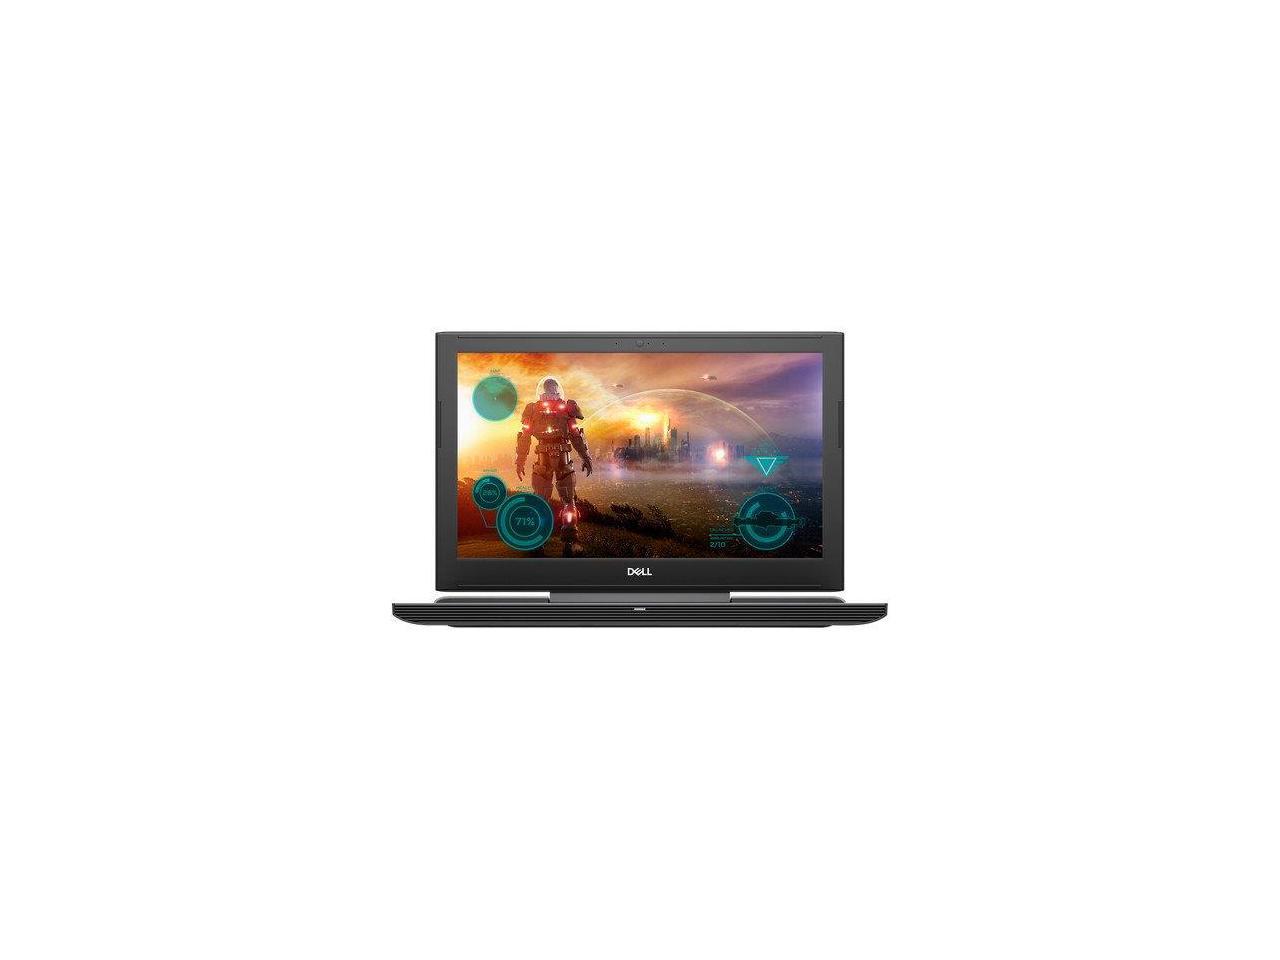 Dell Inspiron 7000 15.6" IPS FHD Gaming Laptop | VR Ready | Intel Quad Core i5-7300HQ | 24GB RAM 1024GB SSD 500GB HDD | NVIDIA GeForce GTX 1060 6GB GDDR5 | Windows 10 Black